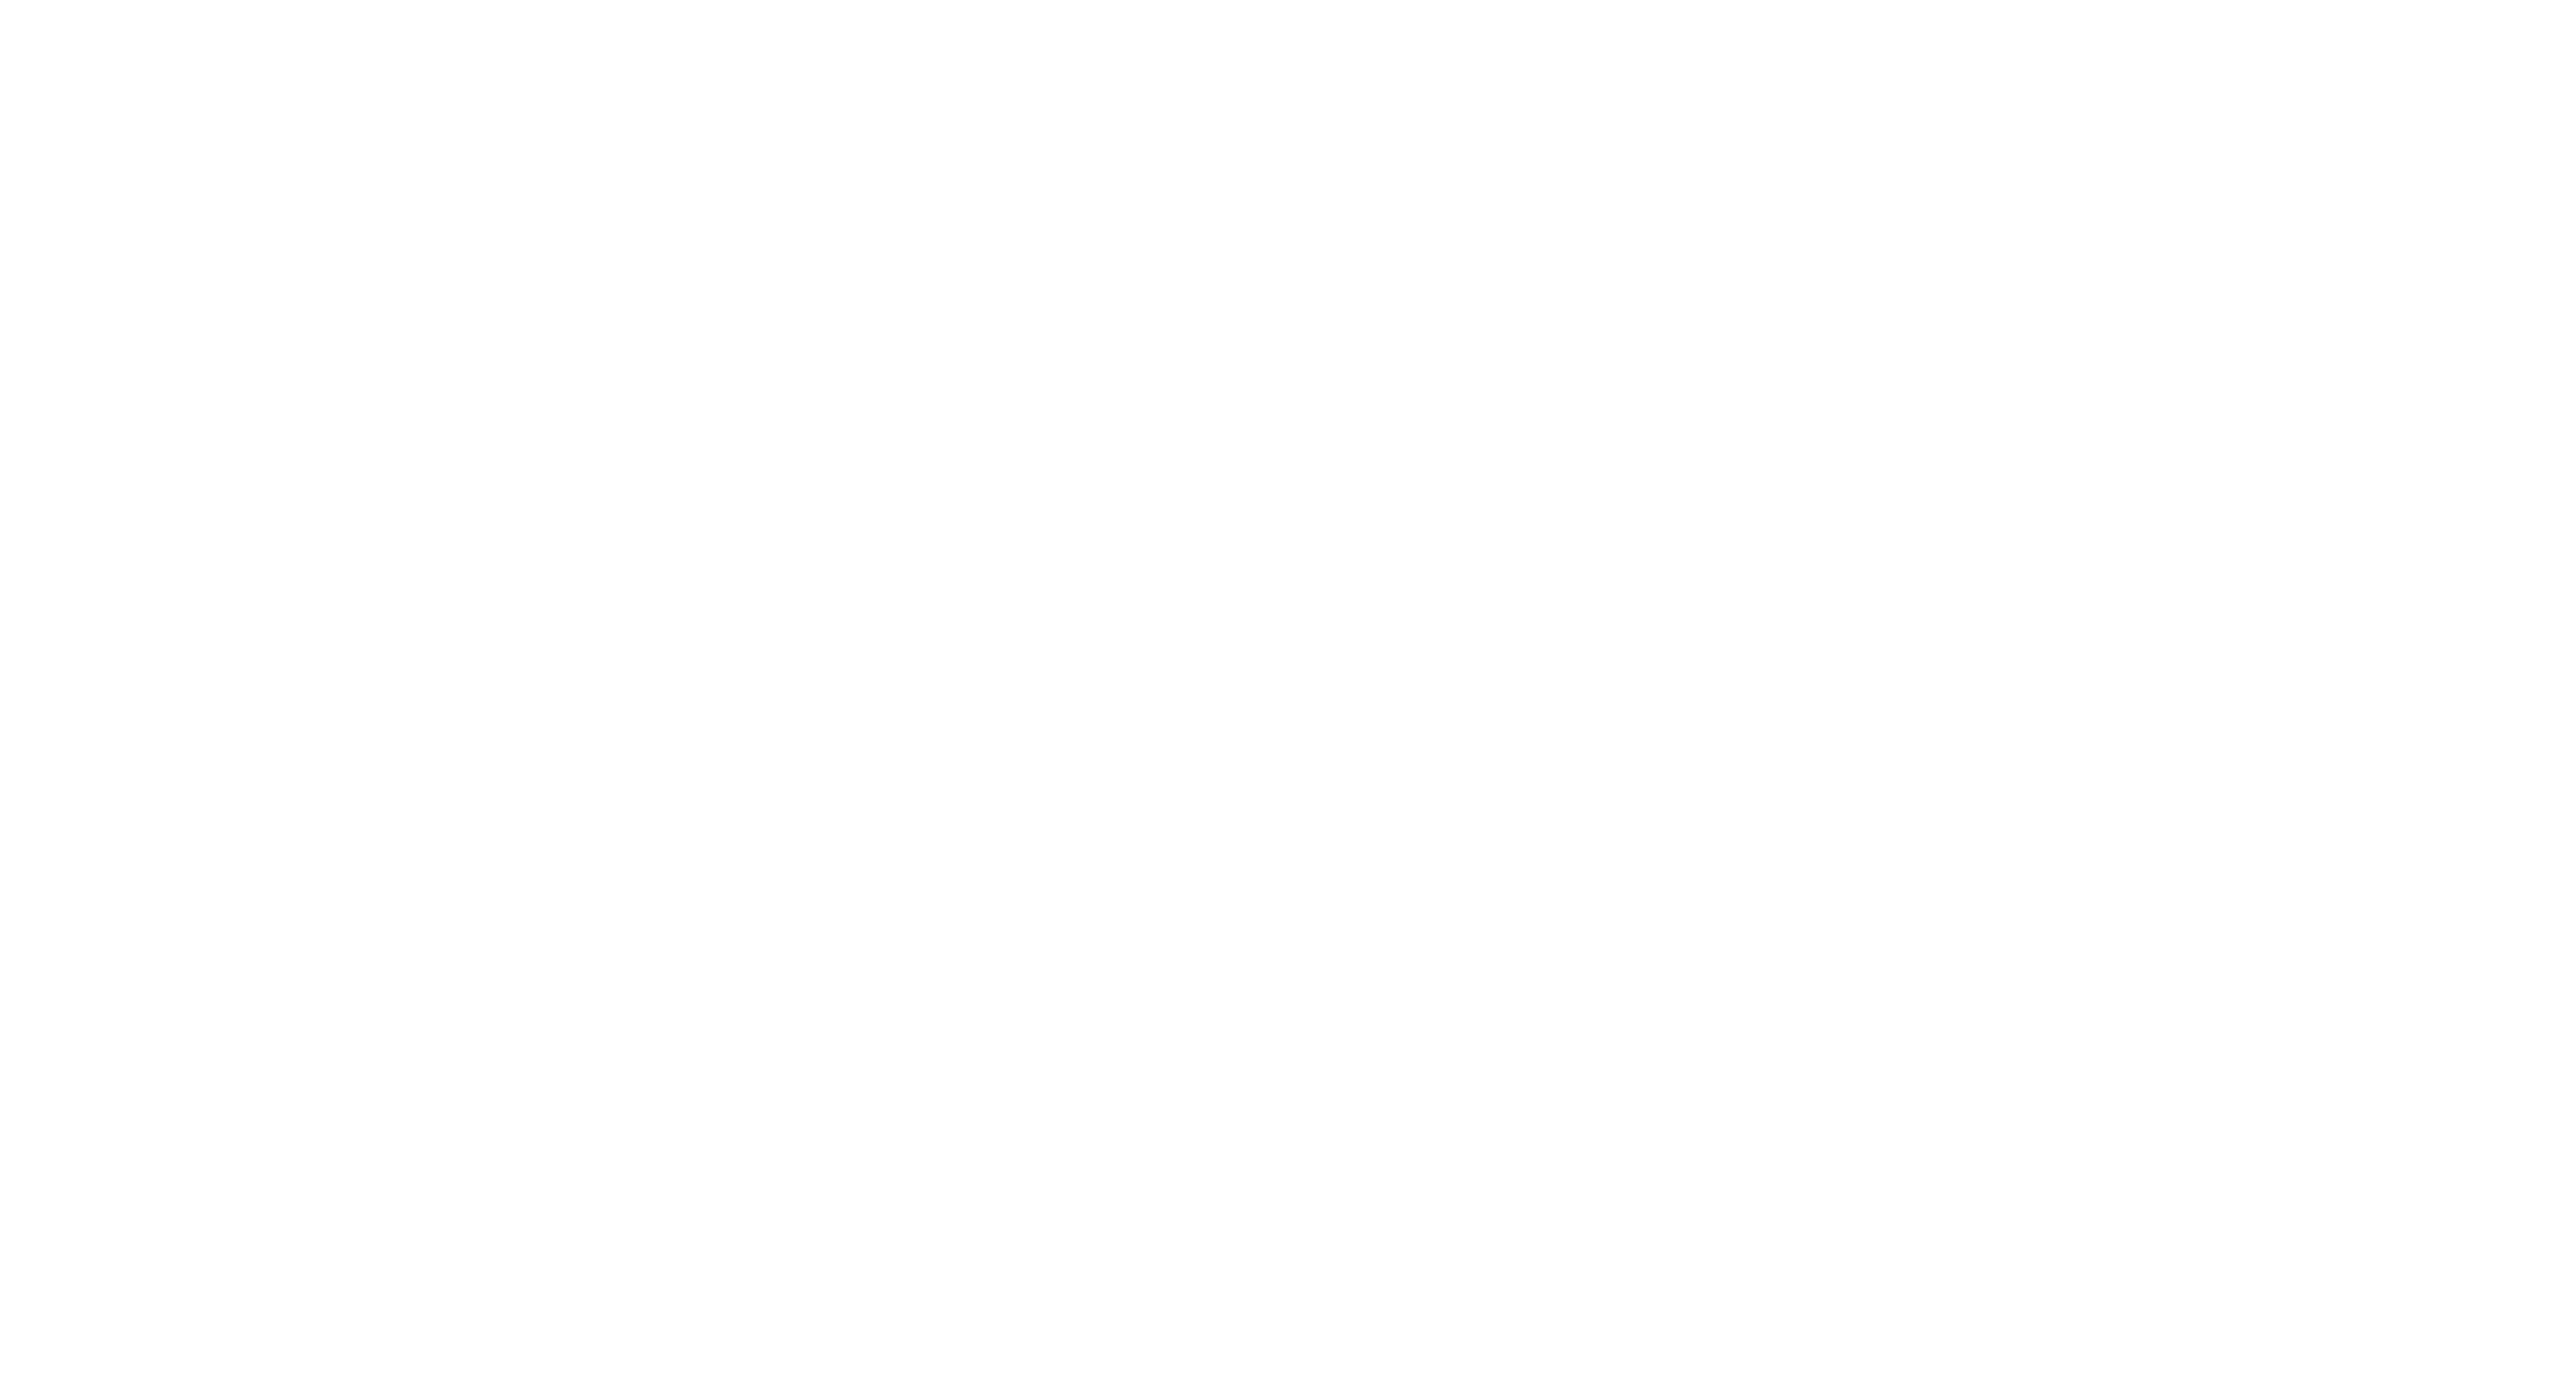 Arket logo